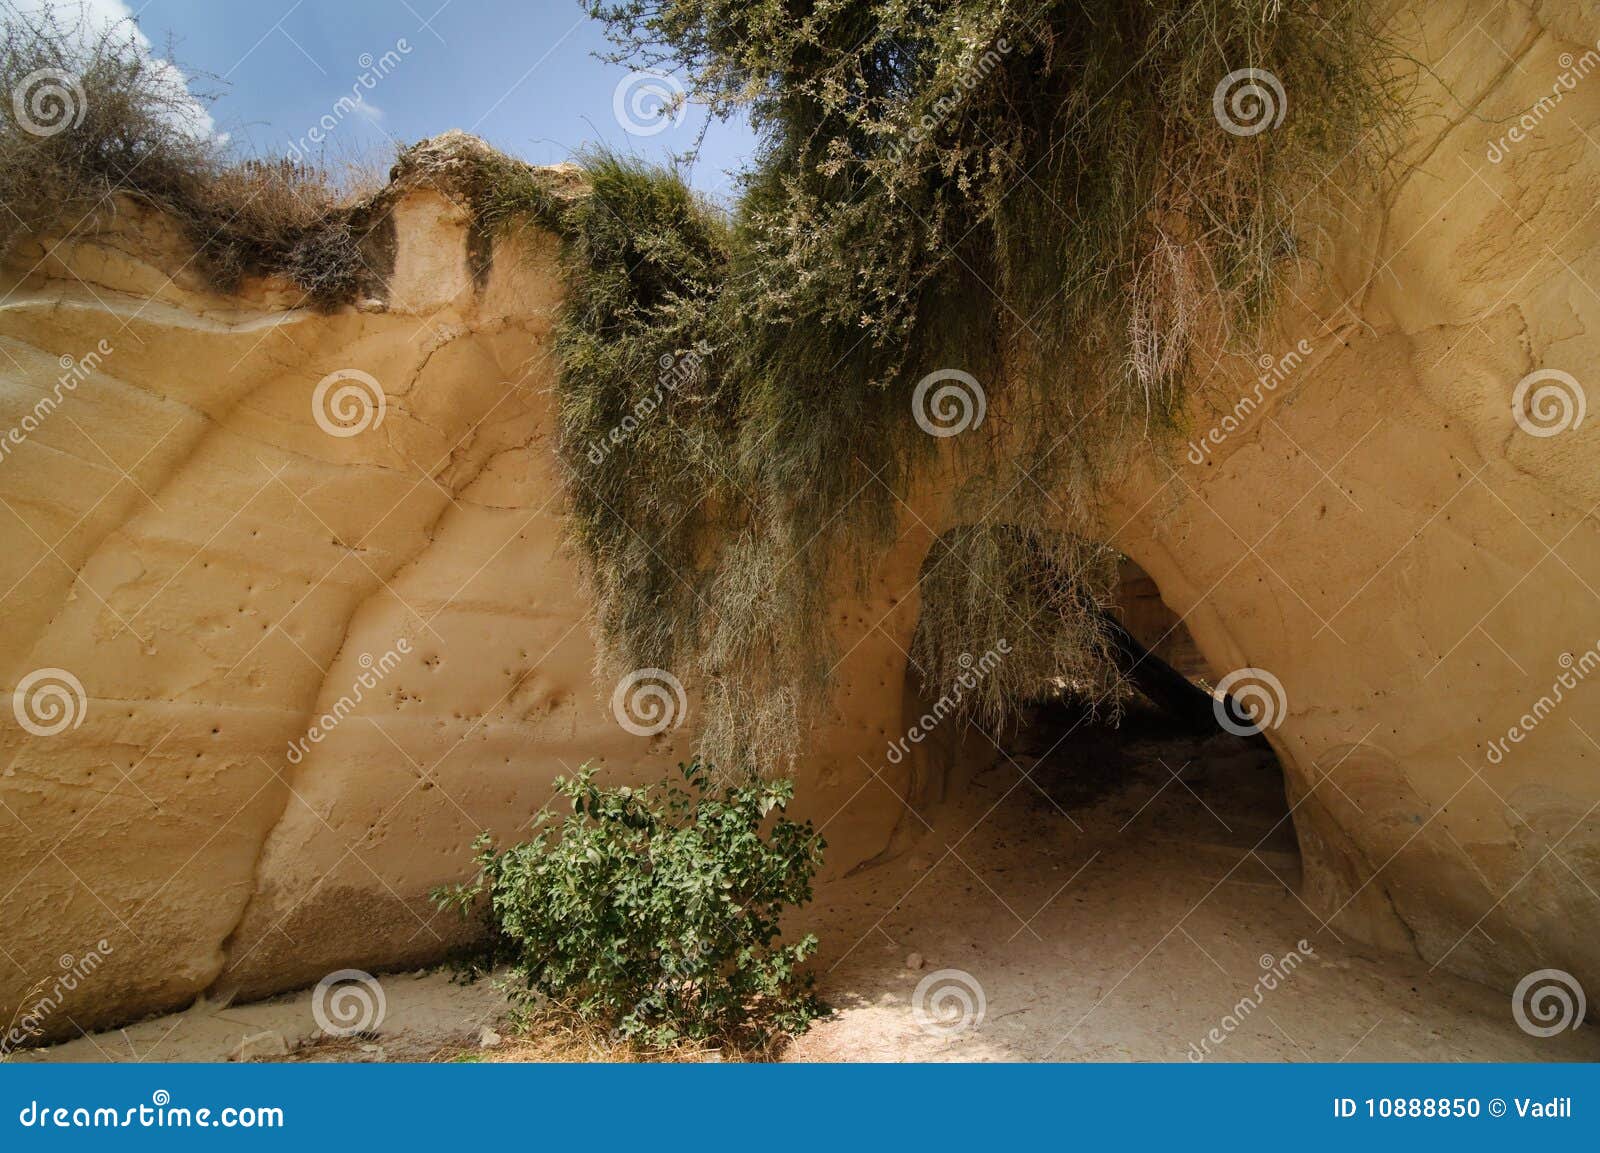 beit guvrin(maresha) caves